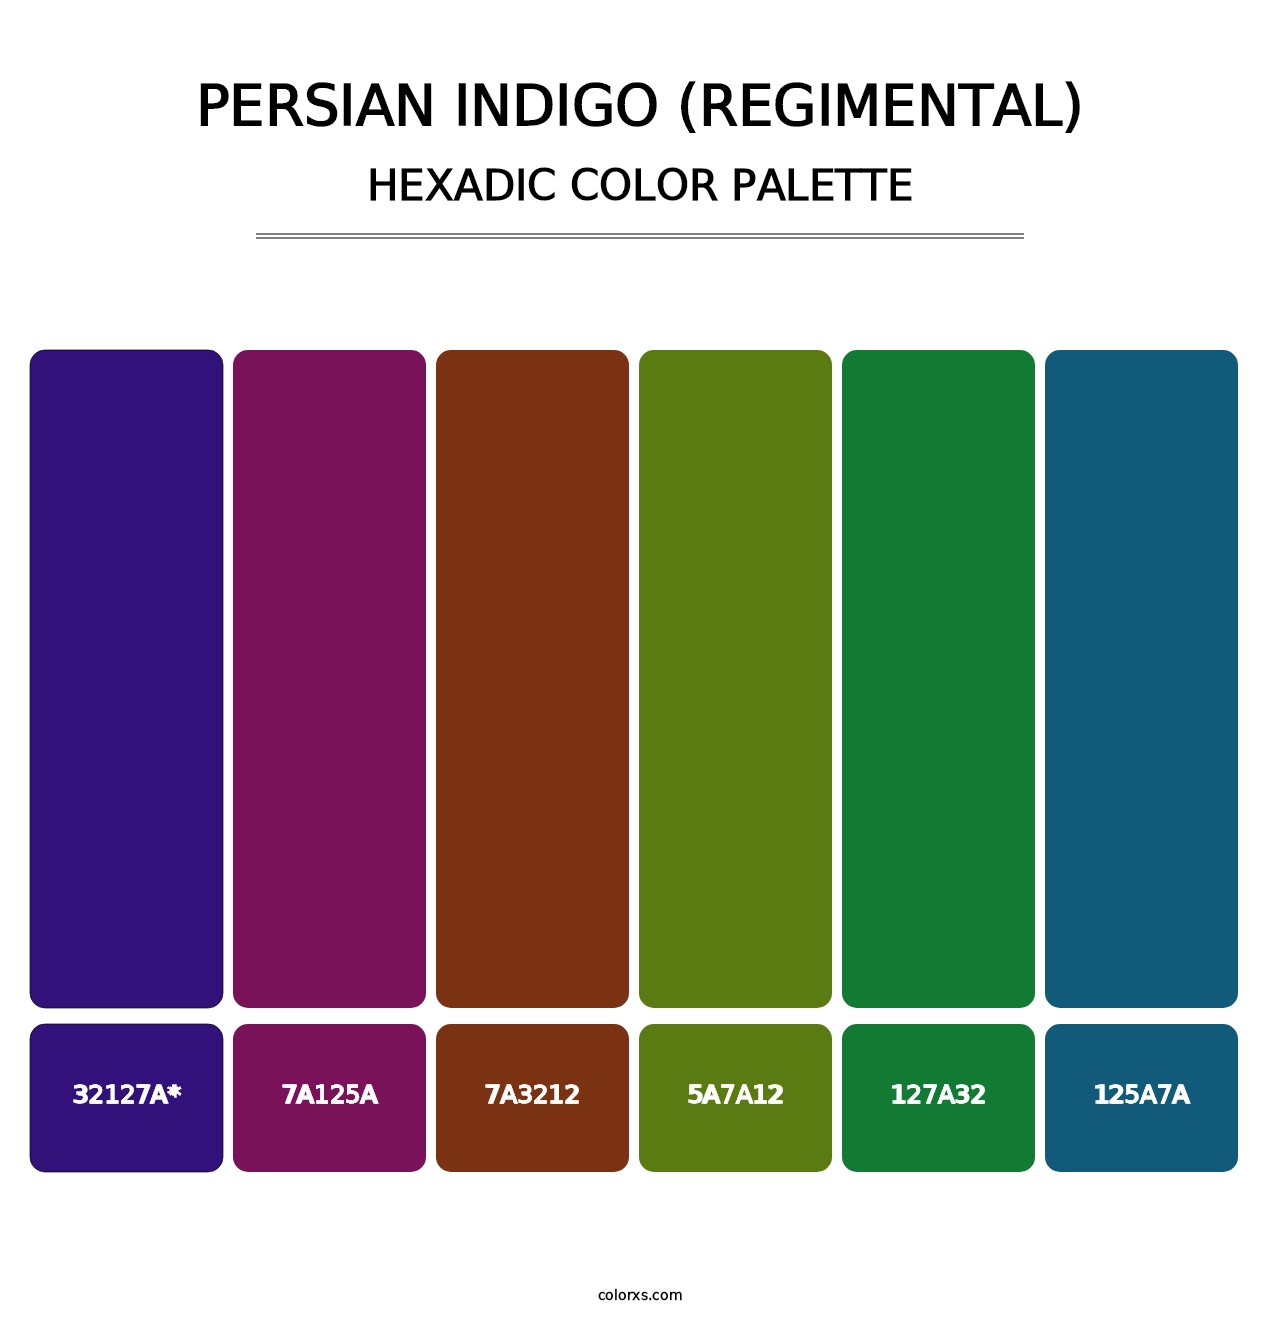 Persian Indigo (Regimental) - Hexadic Color Palette